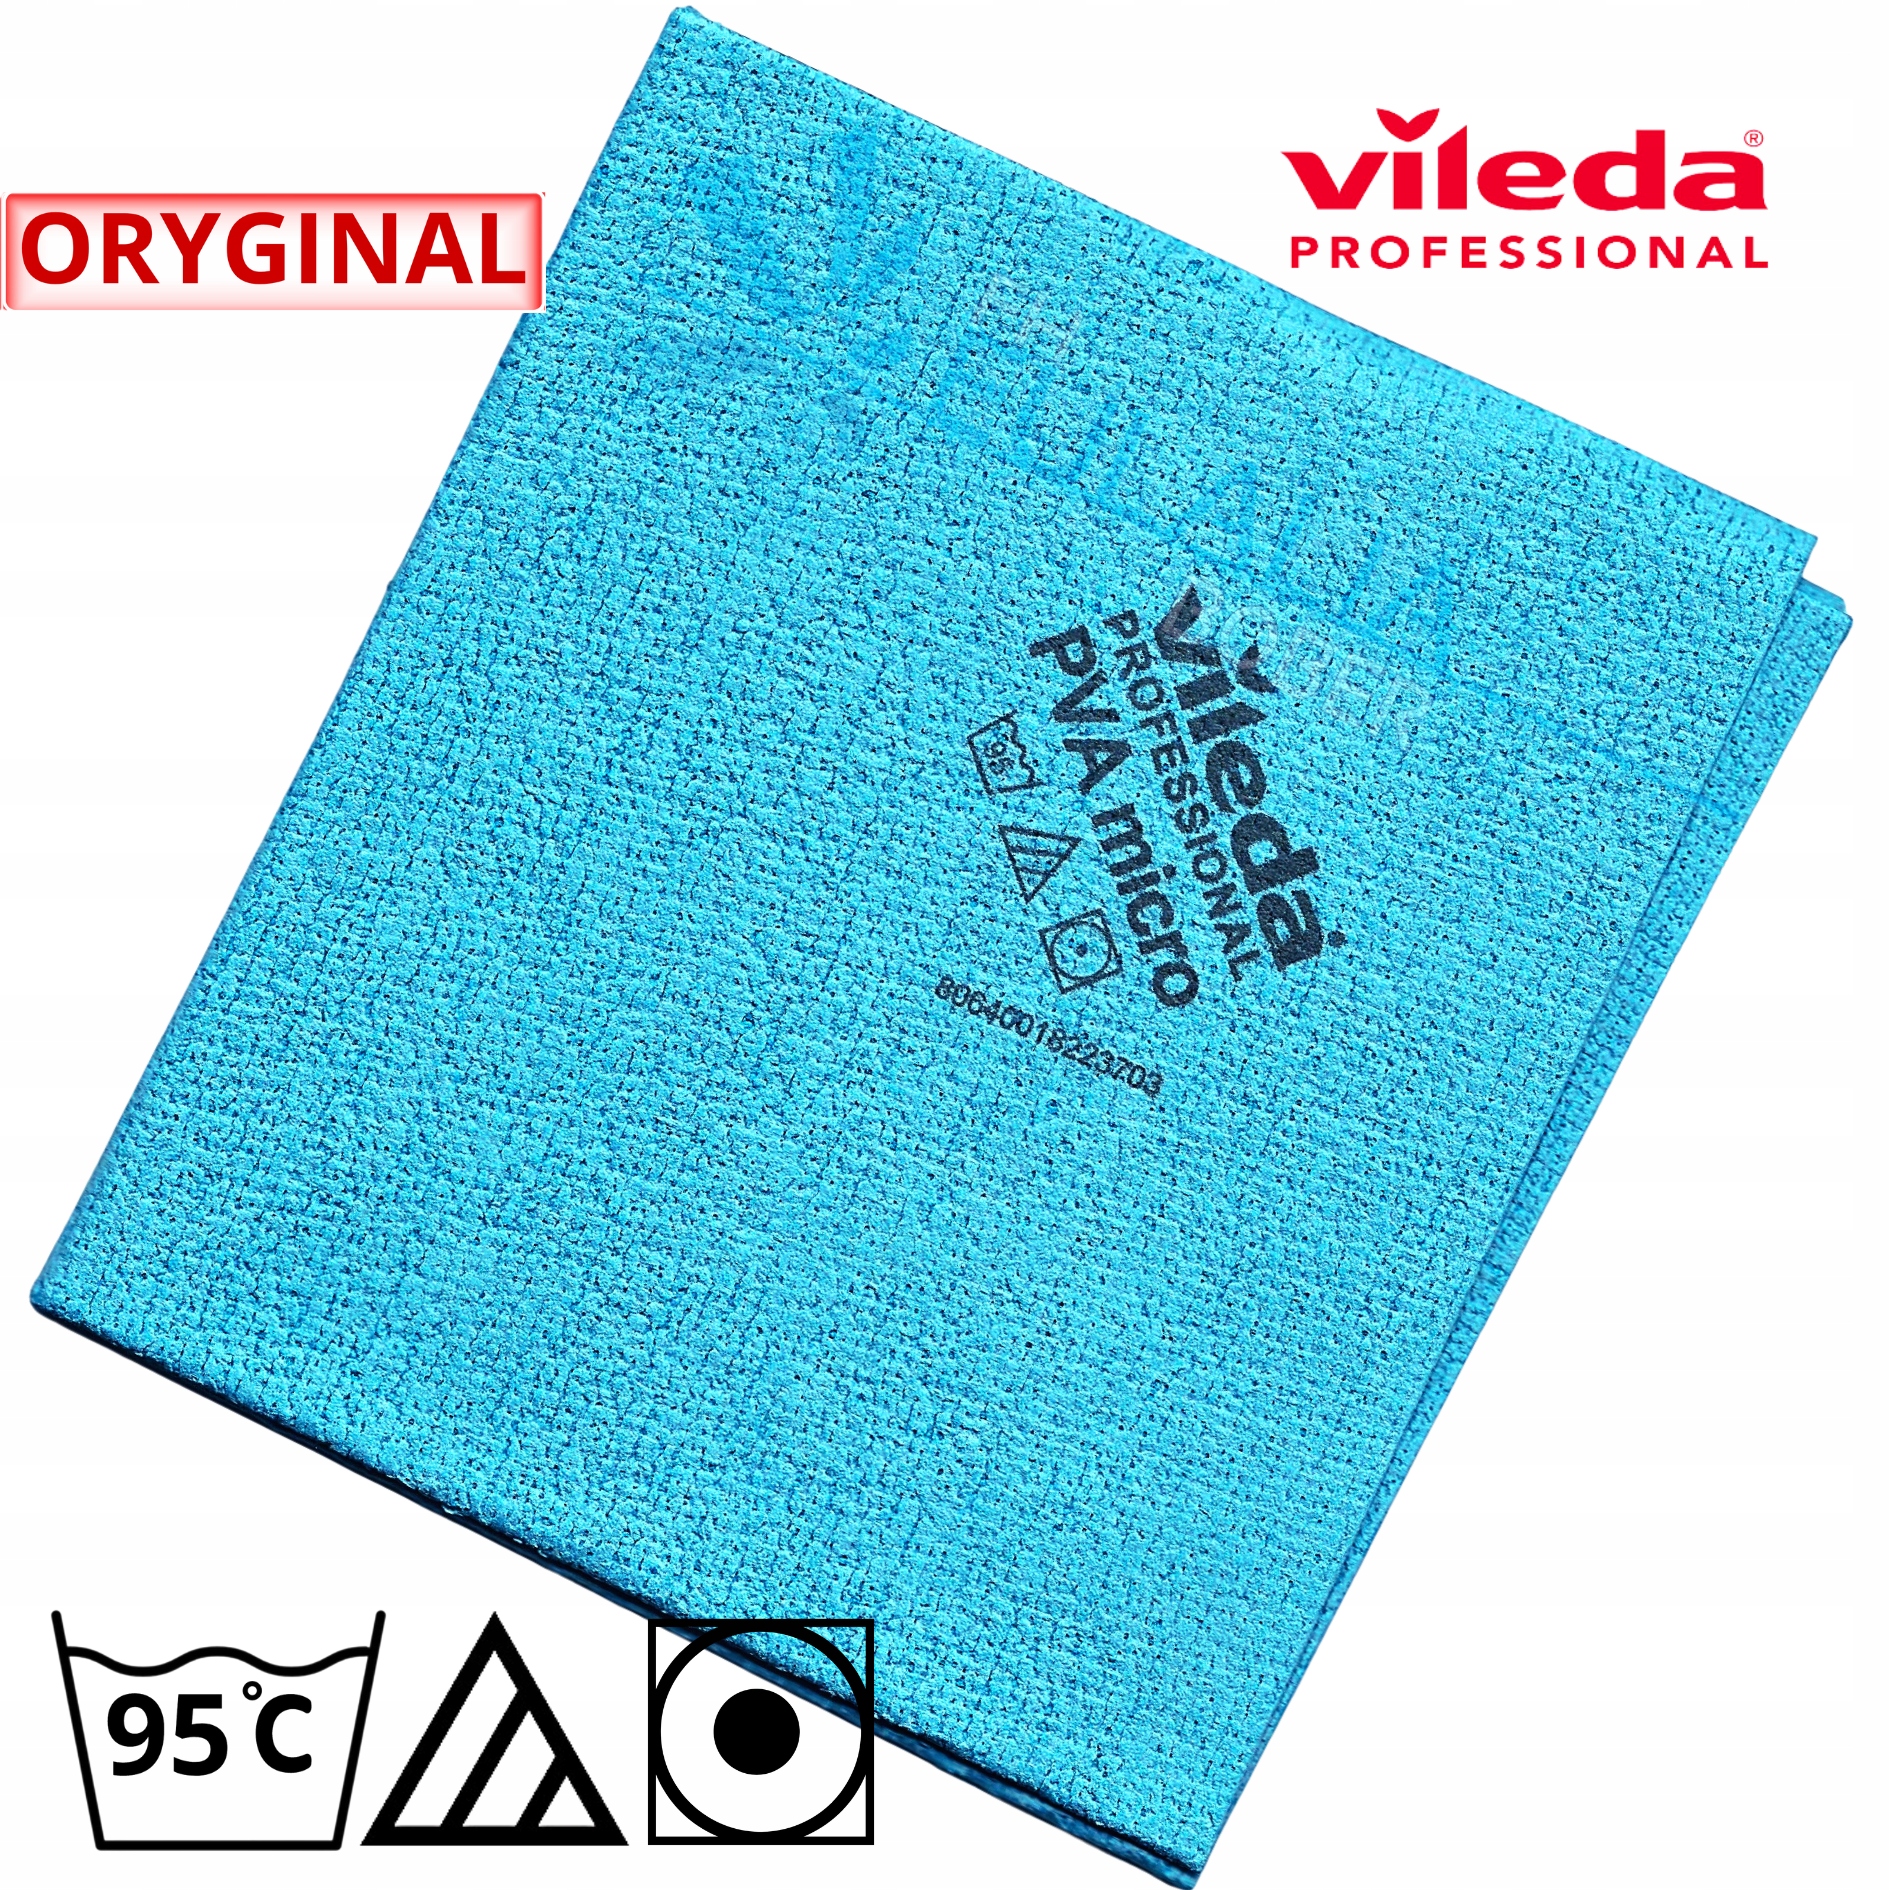 Vileda Professional PVA Microfiber Cloth